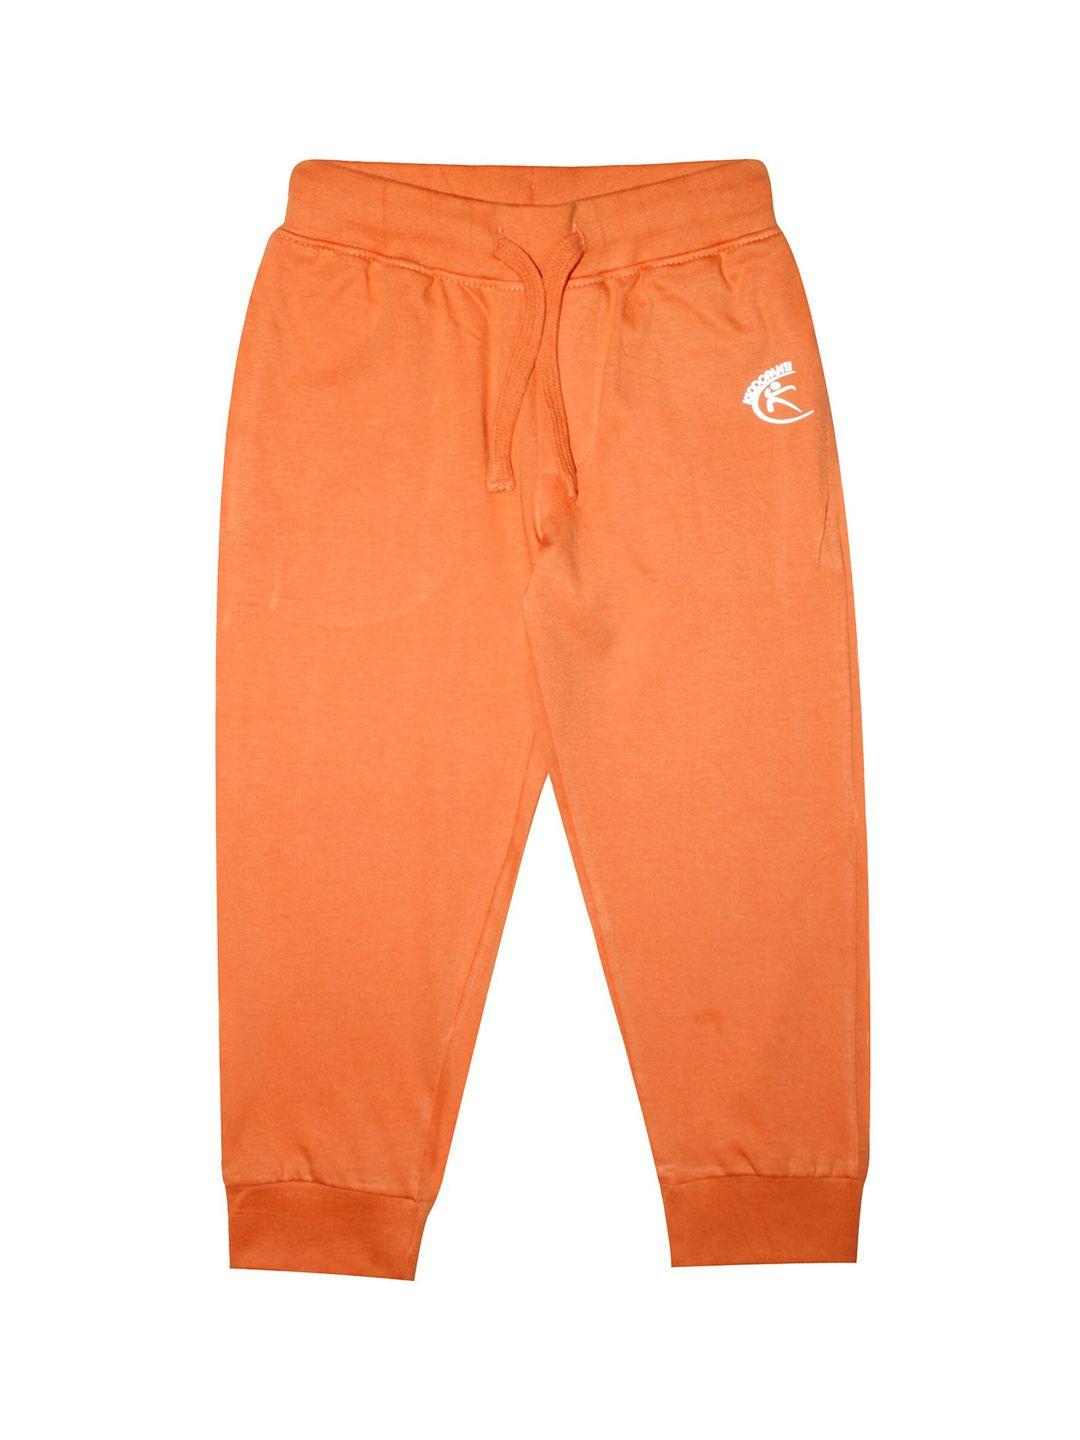 kiddopanti kids orange solid pure cotton joggers